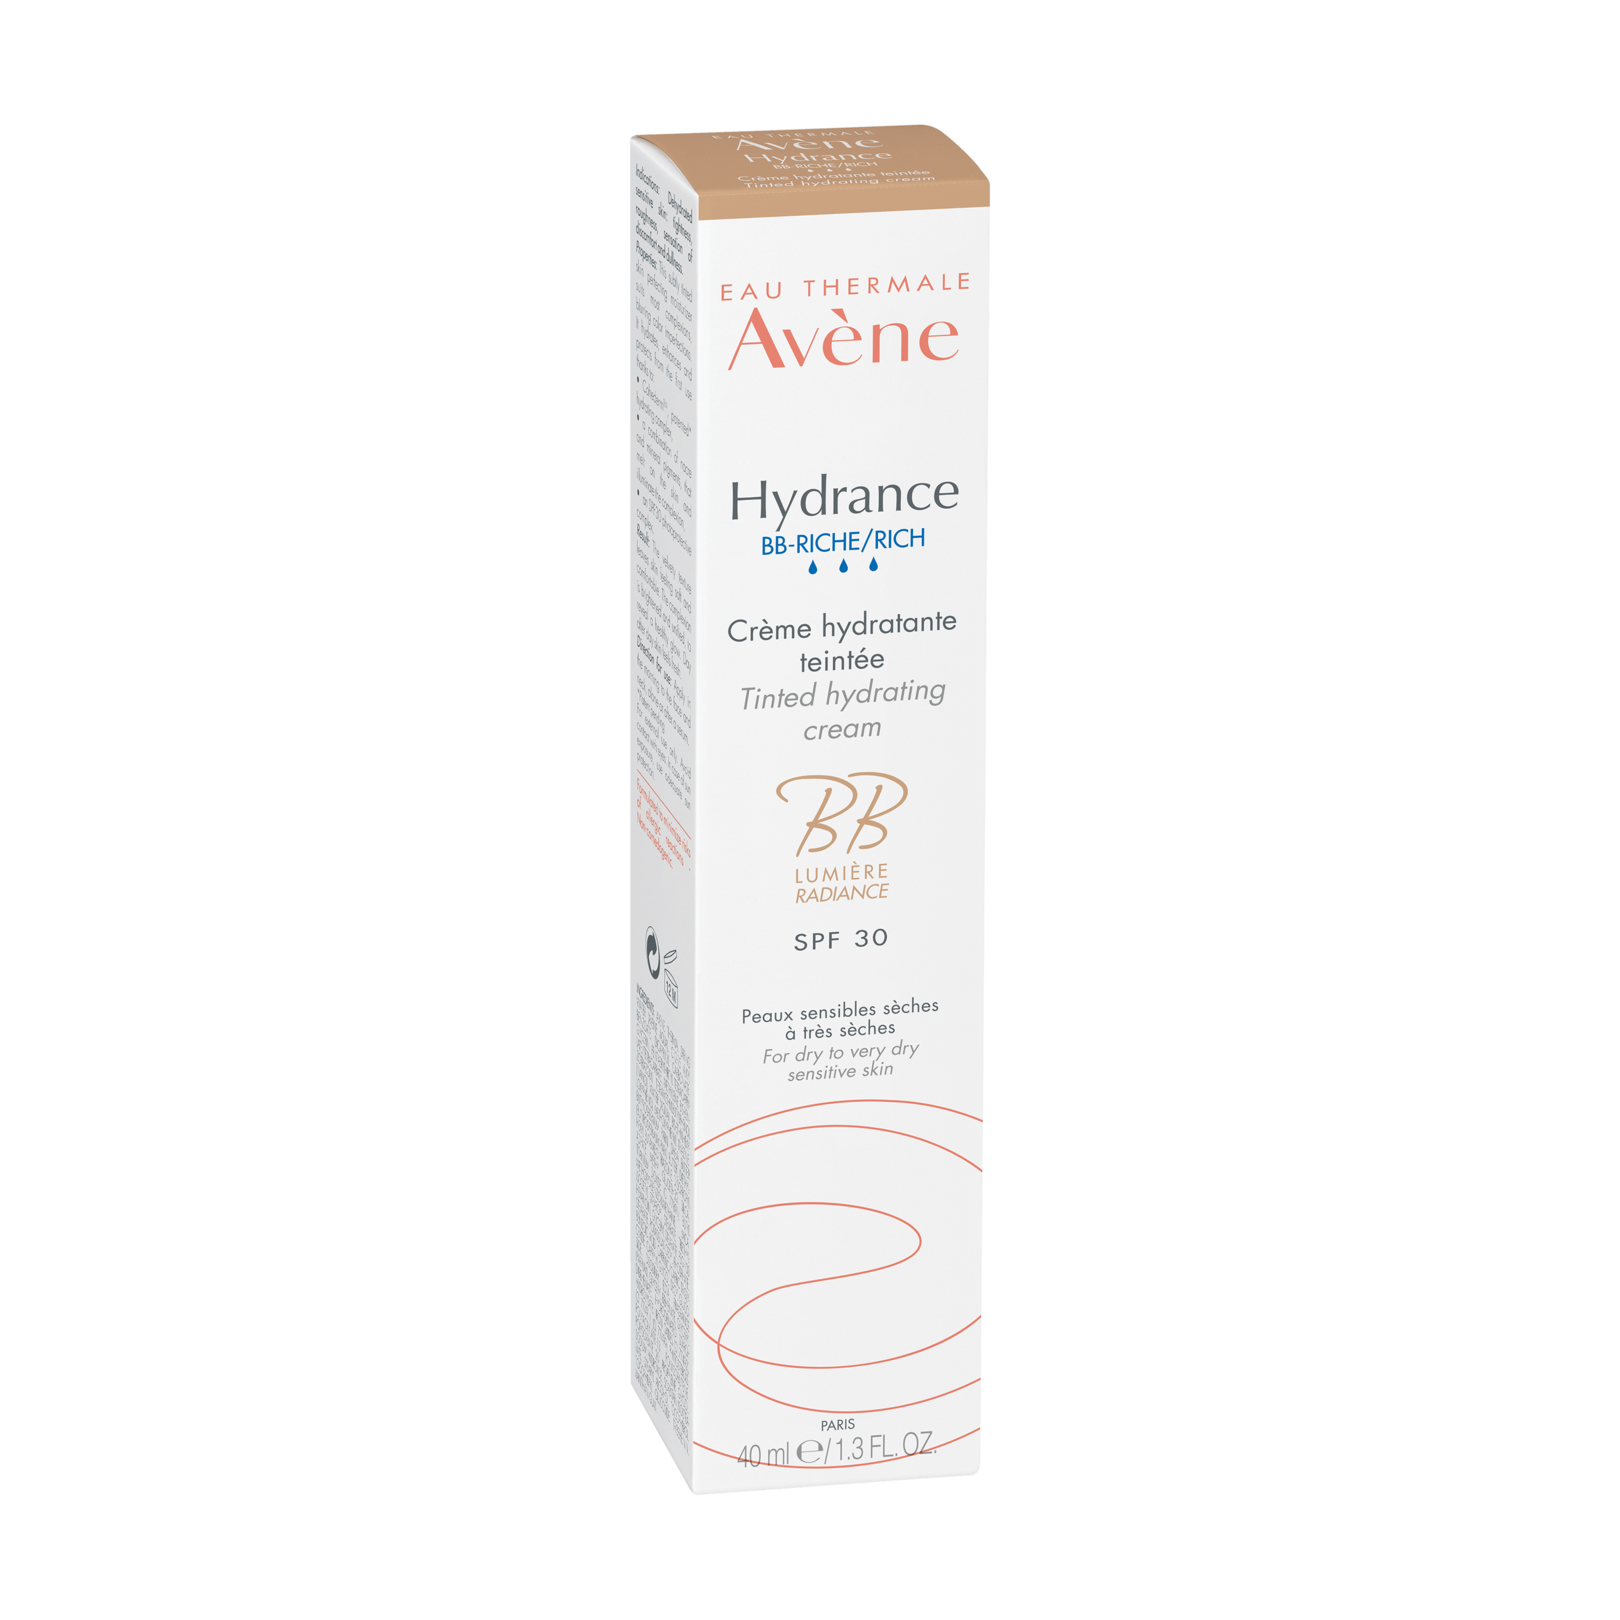 Eau Thermale Avène - Hydrance BB cream enriquecida 4 en 2